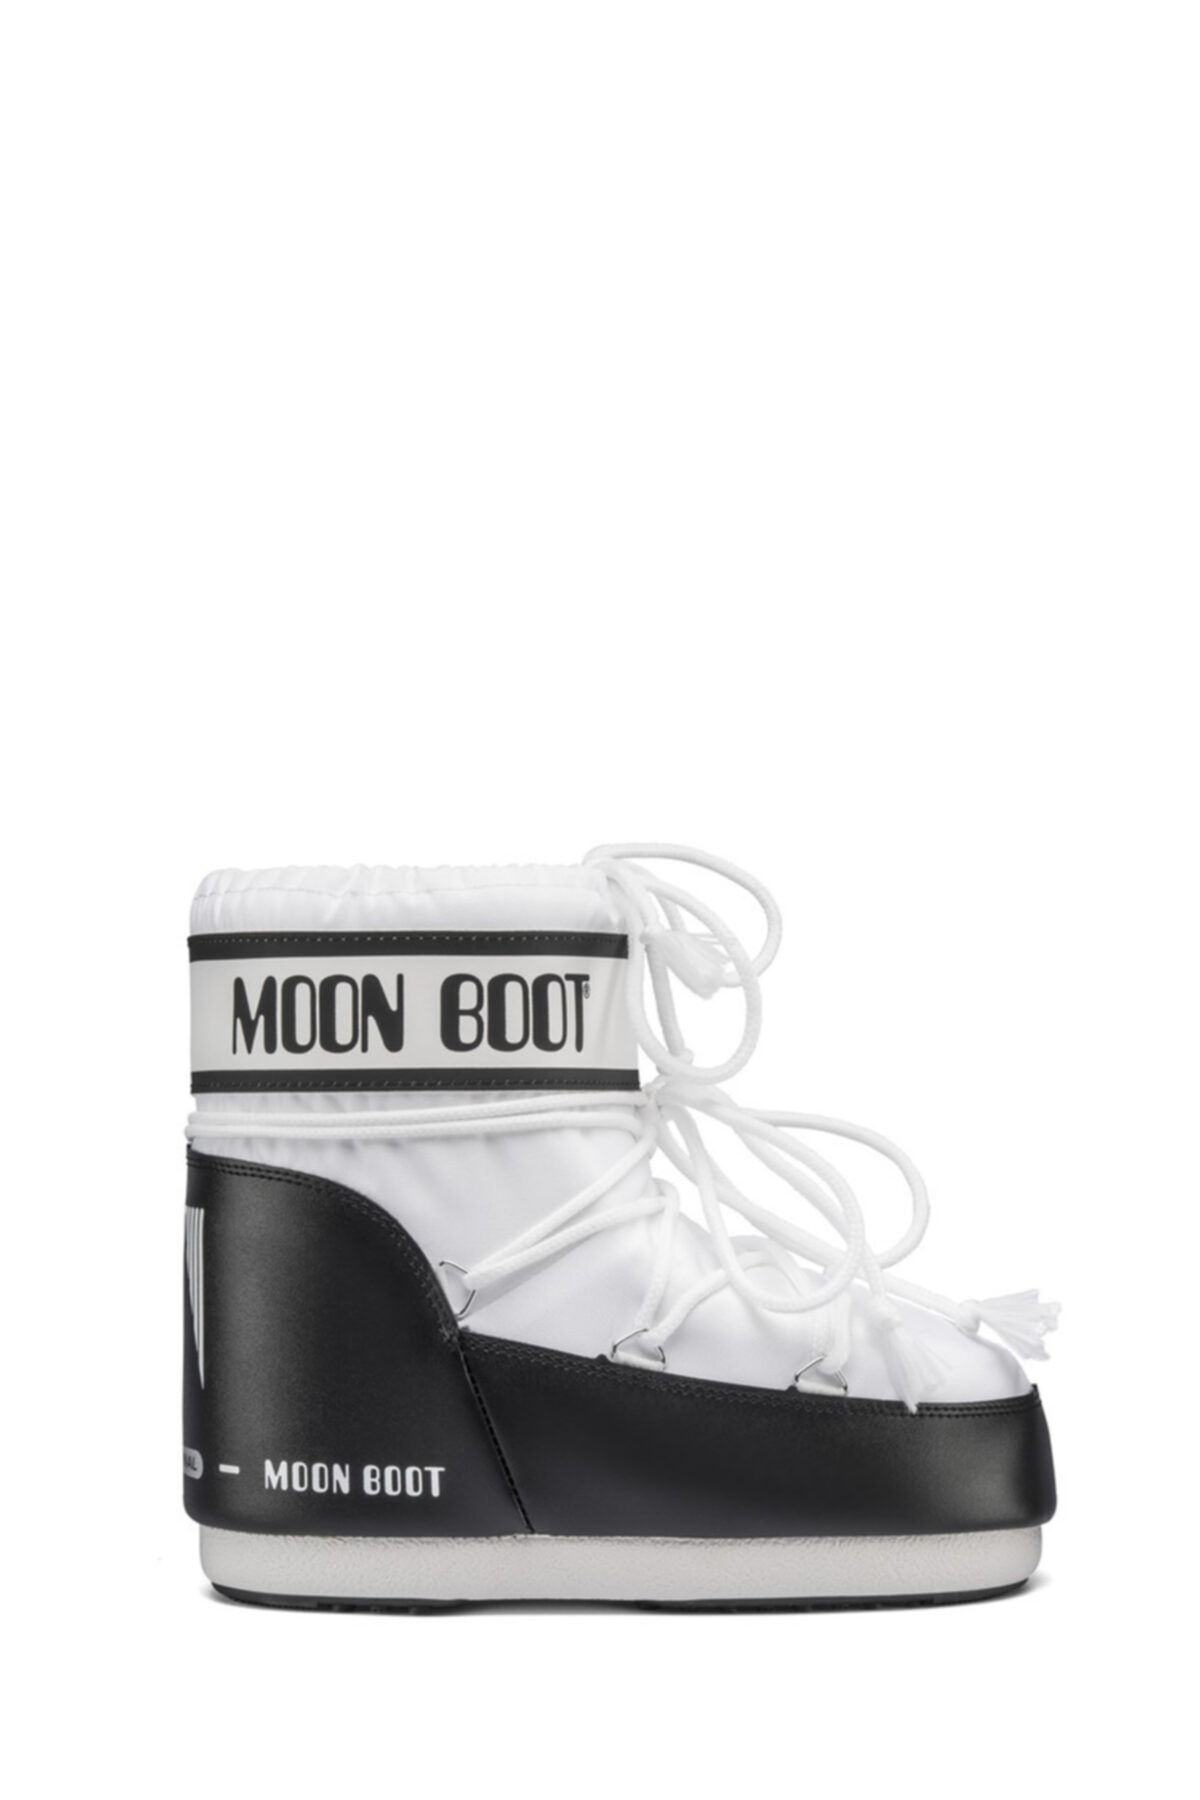 Moon Boot Erkek Beyaz Classıc Low 2 Whıte Kar Botu 14093400 002